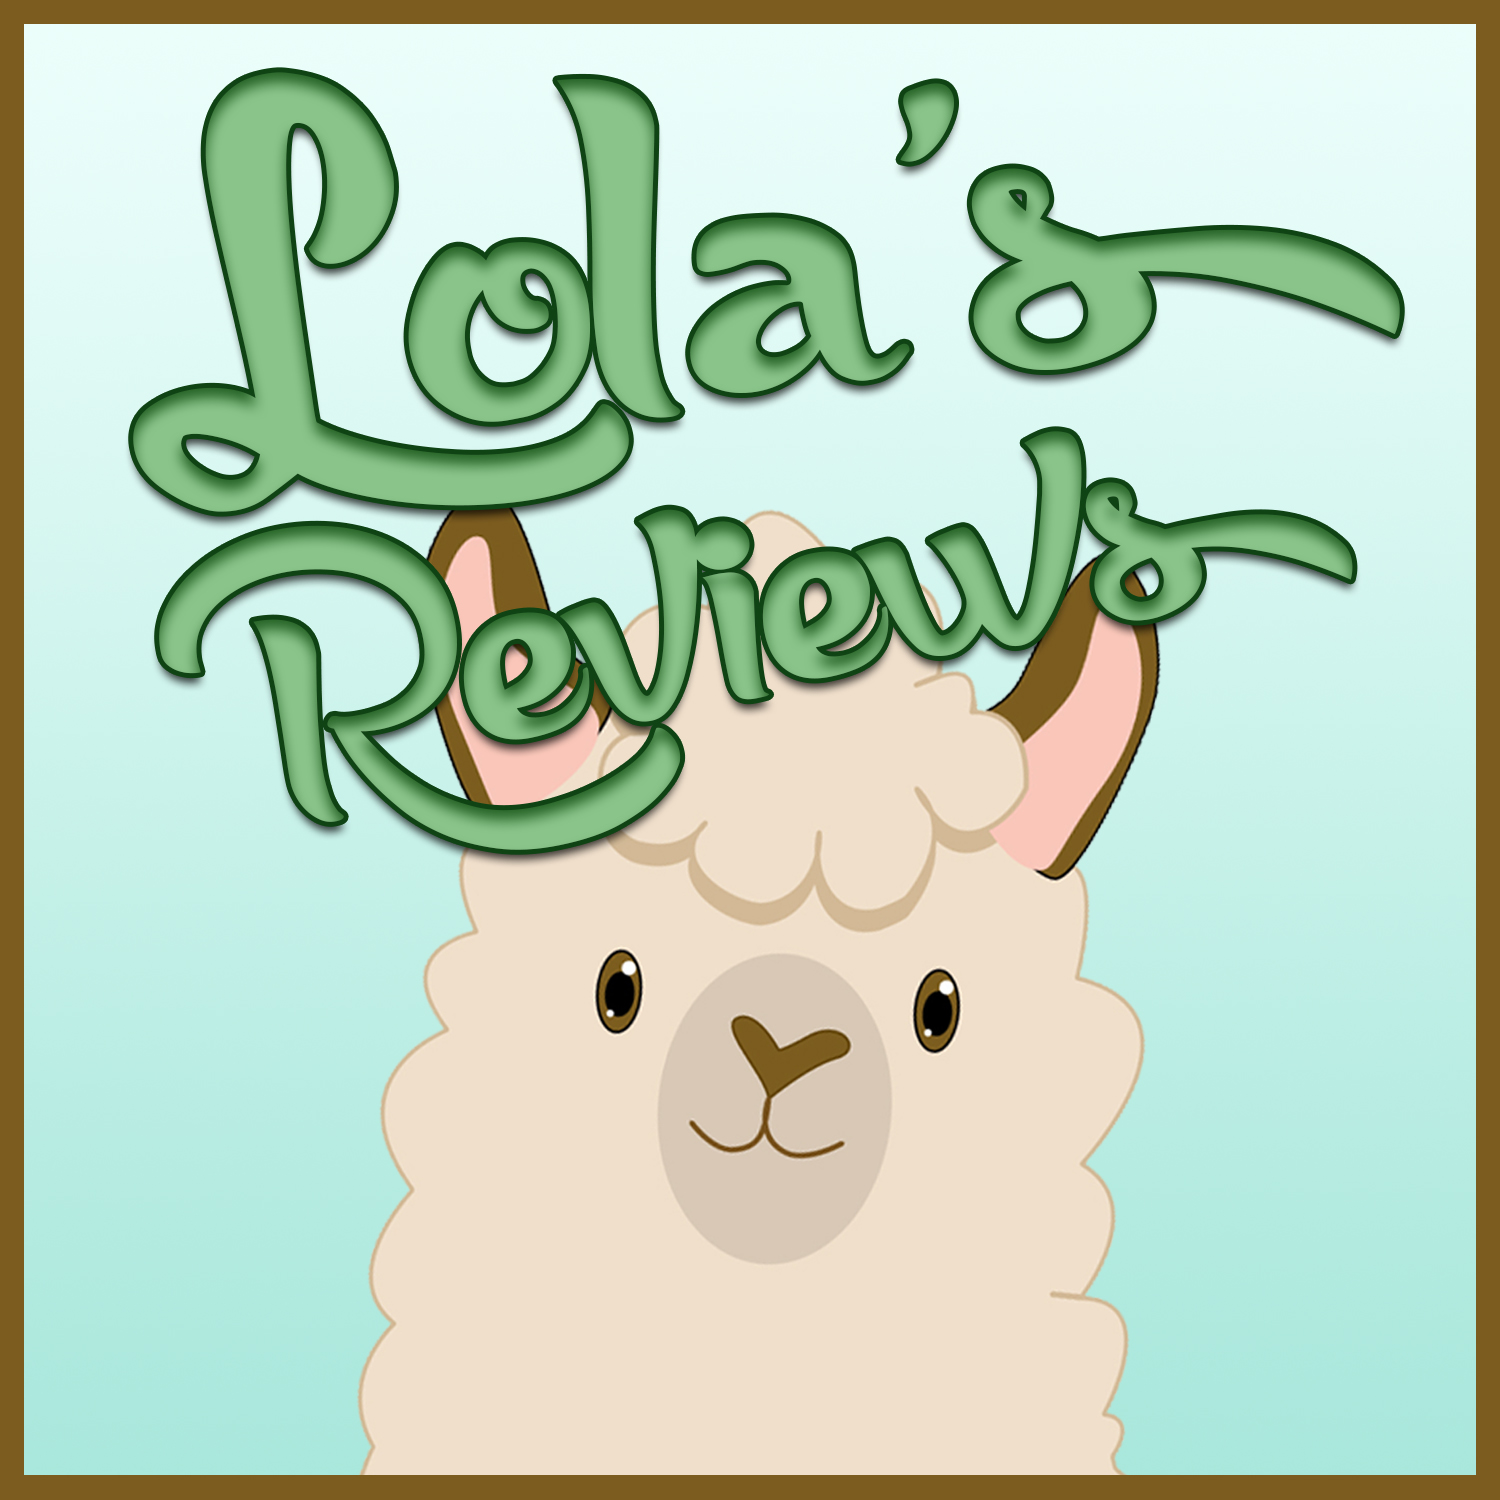 Lola's Reviews